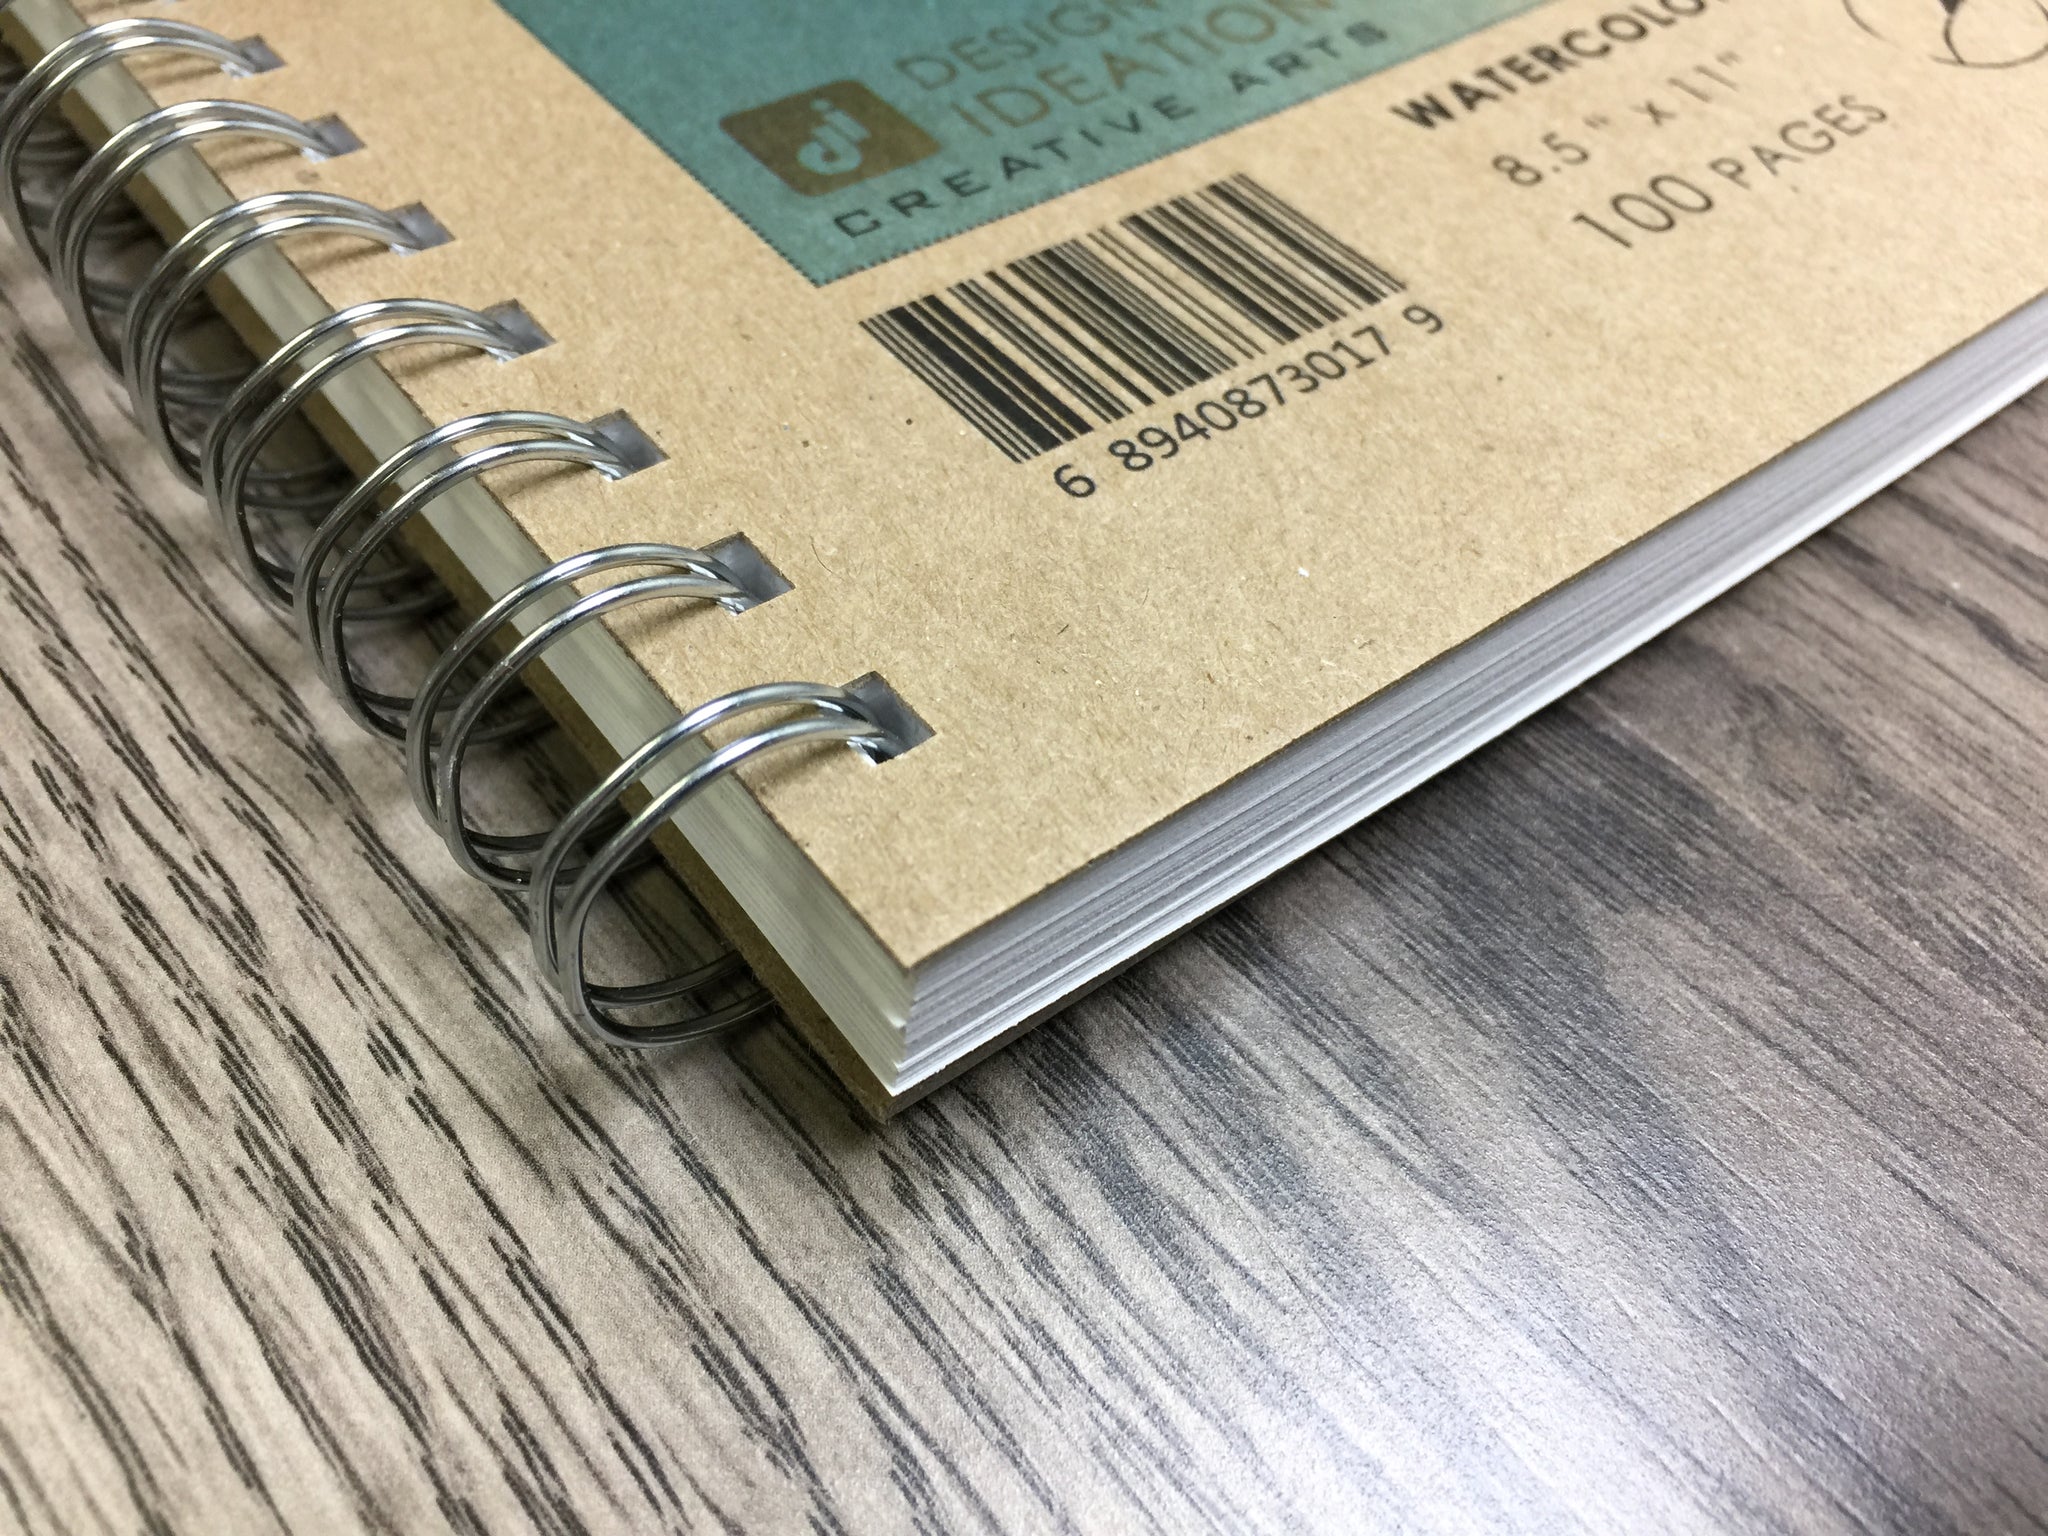 SKETCH Book. Wire Bound. Pad Style. Multi-Media. (11 x 17) TS – Design  Ideation Studio